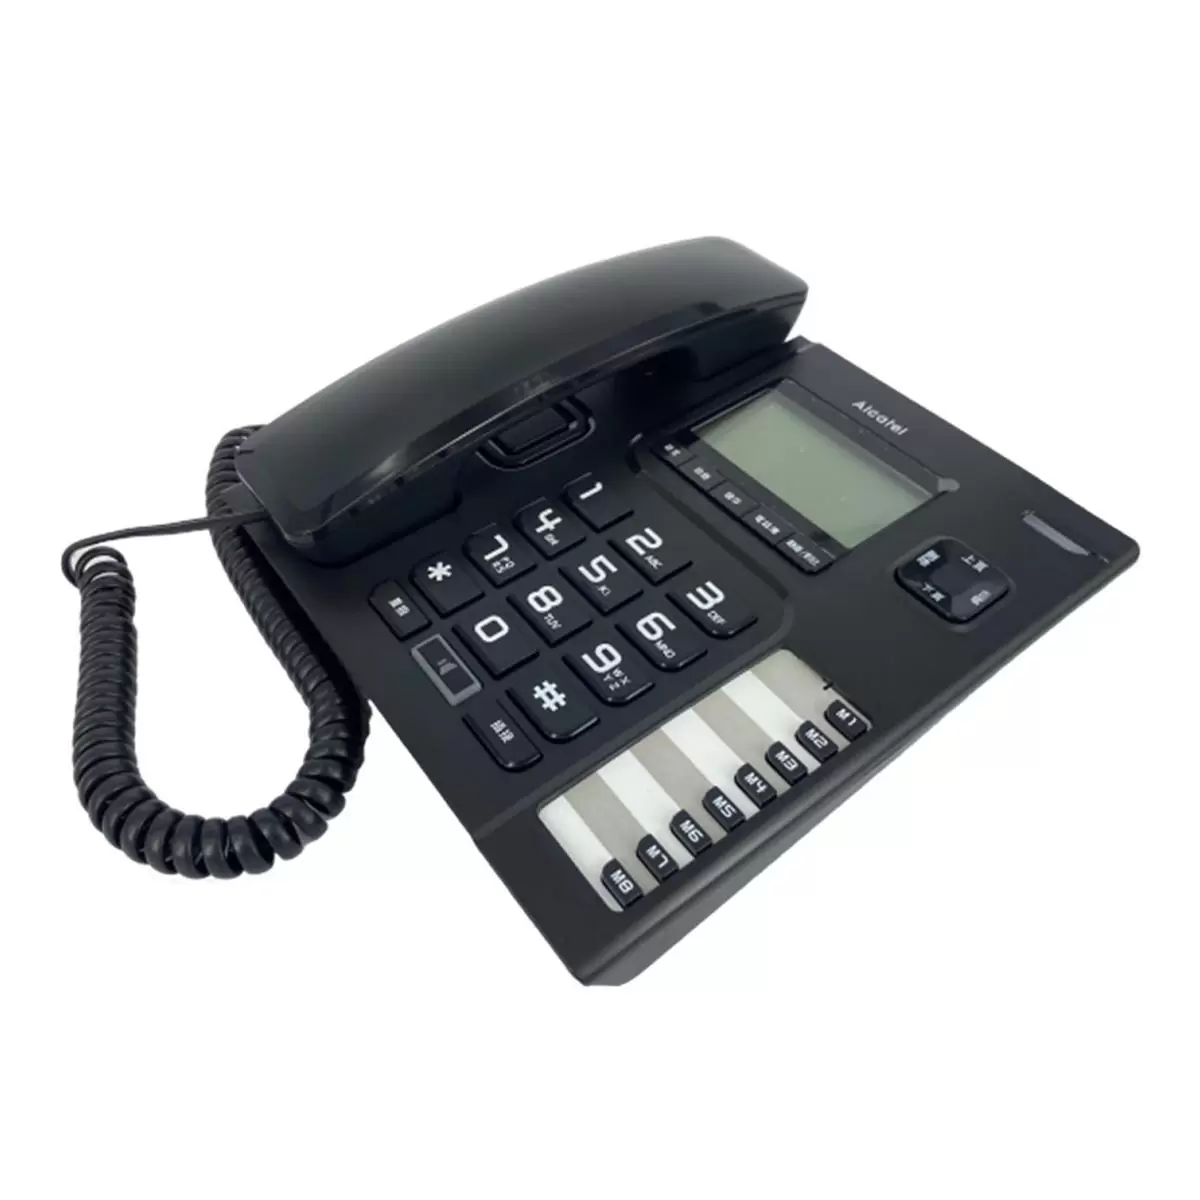 Alcatel 交換機專用家用電話 T76 TW 黑